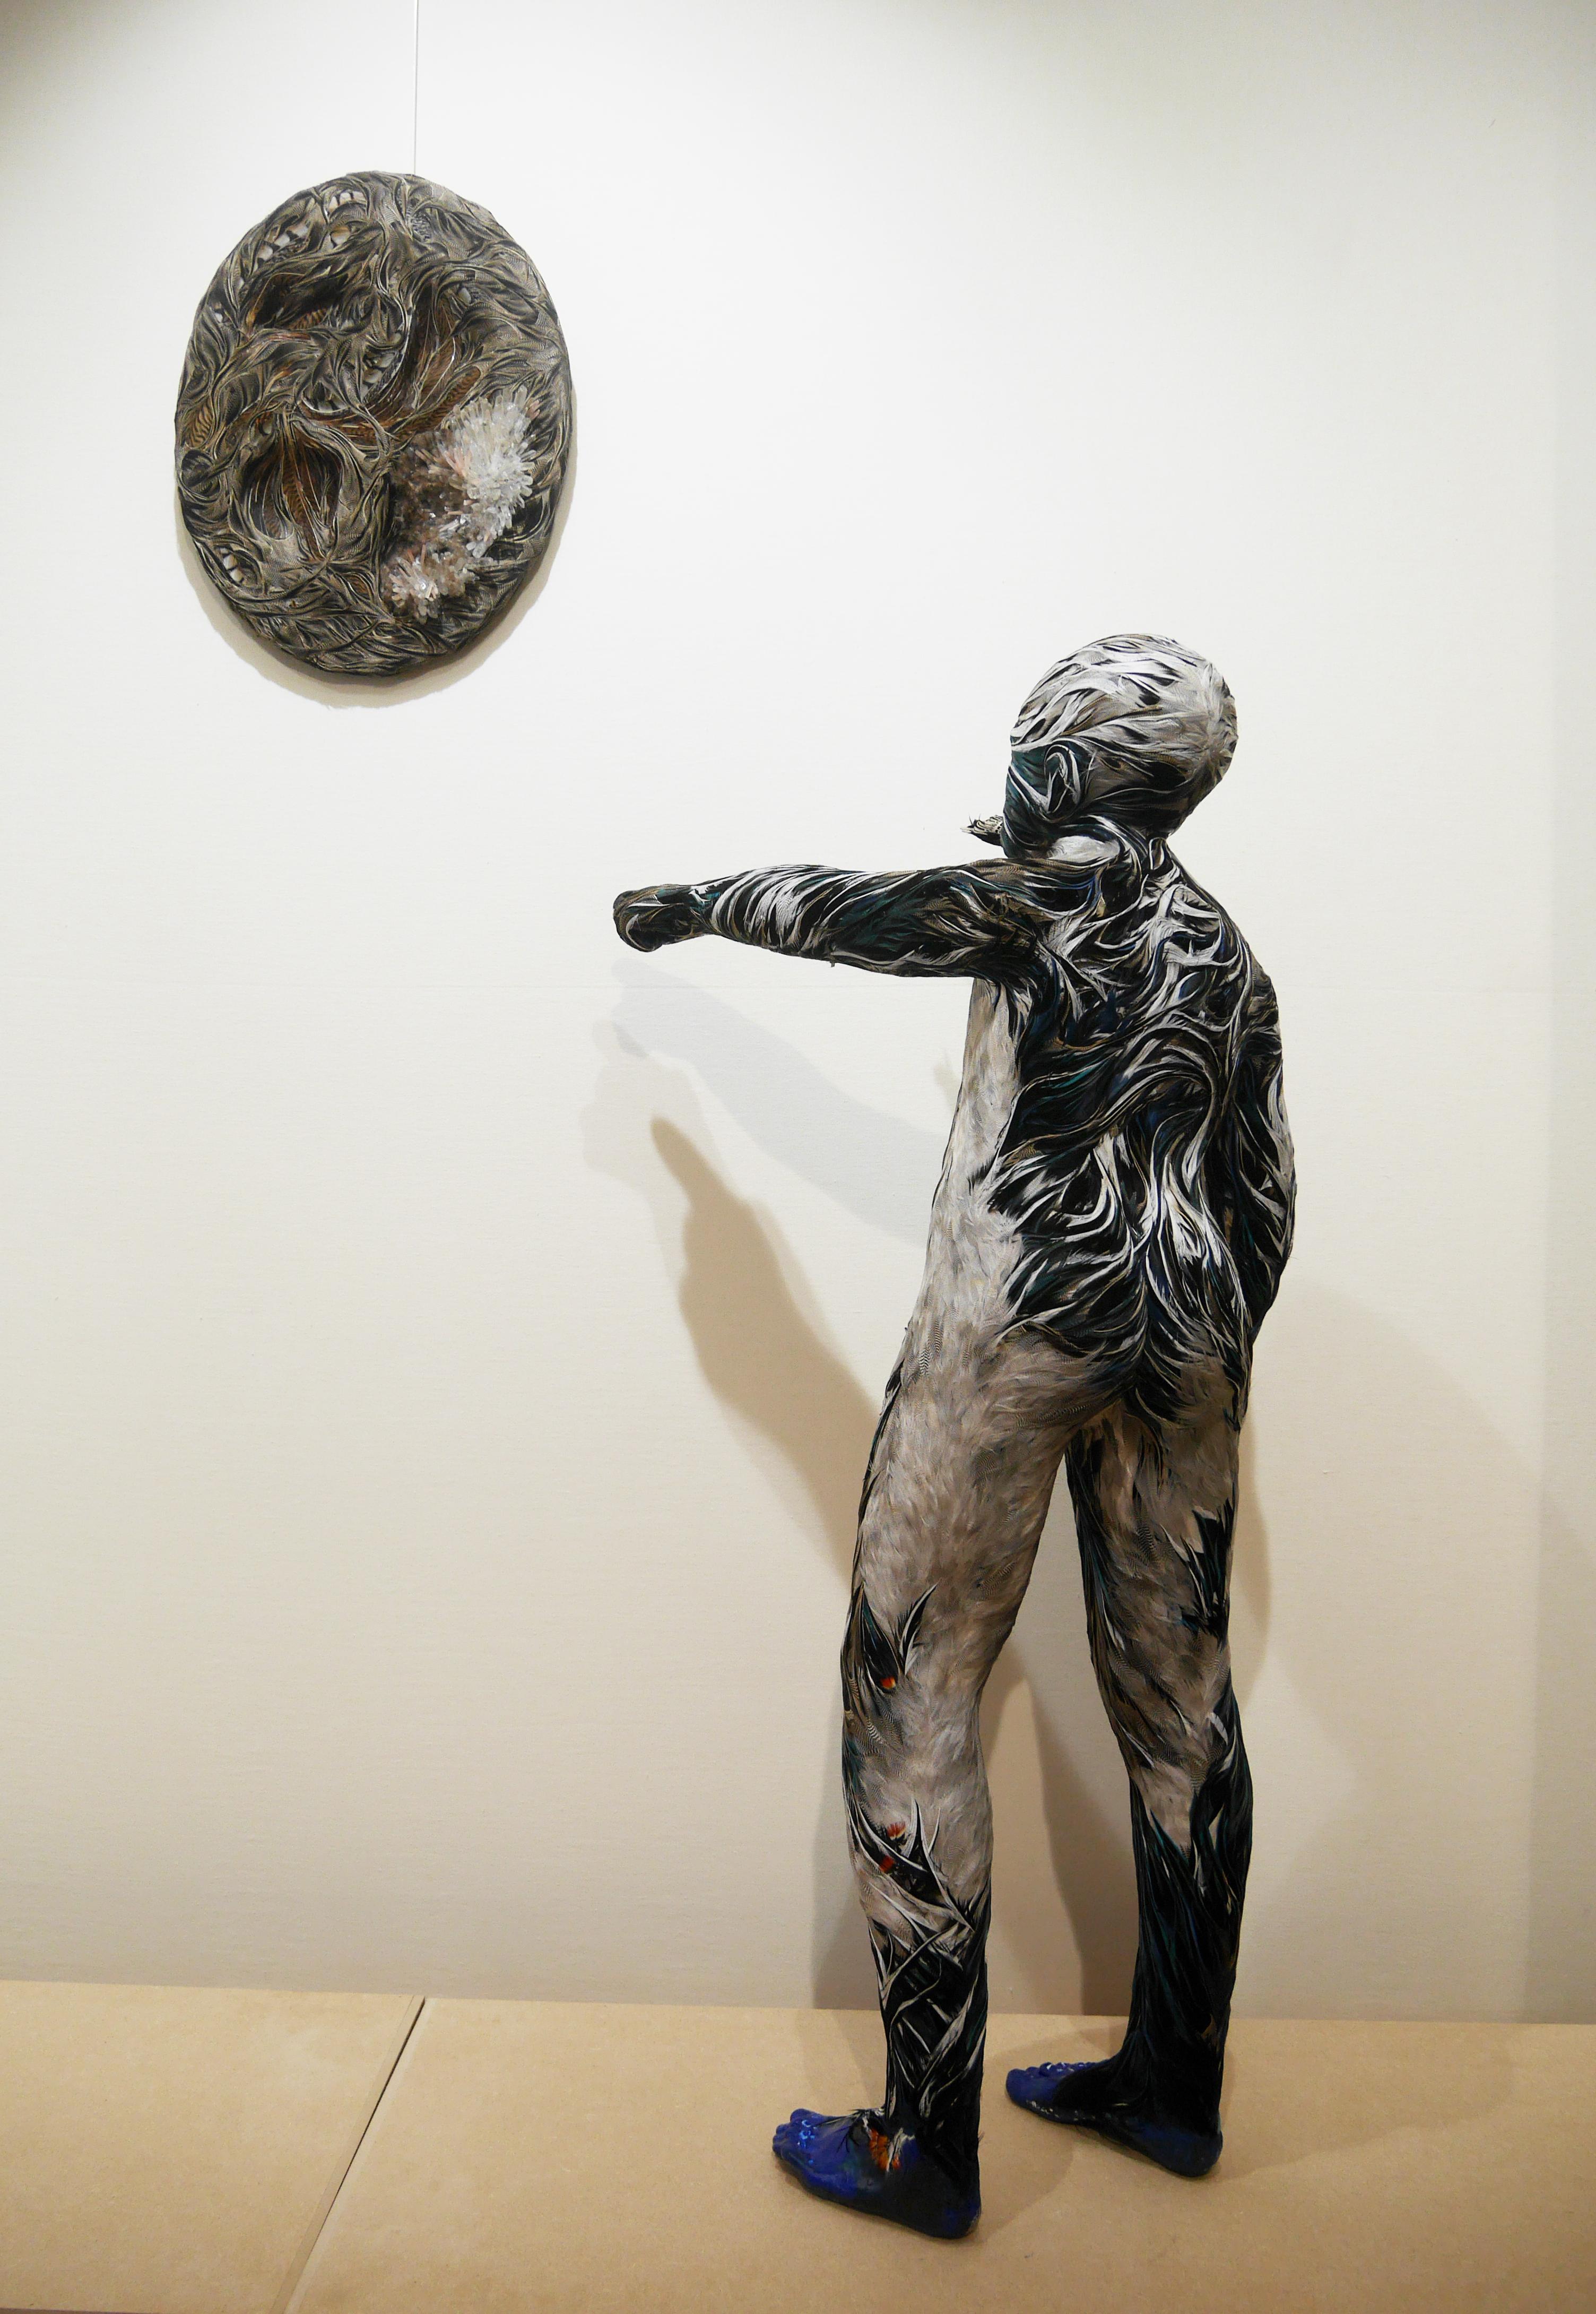 Thémis figurative sculpture, child, fairy tale, feathers by Laurence Le Constant For Sale 11